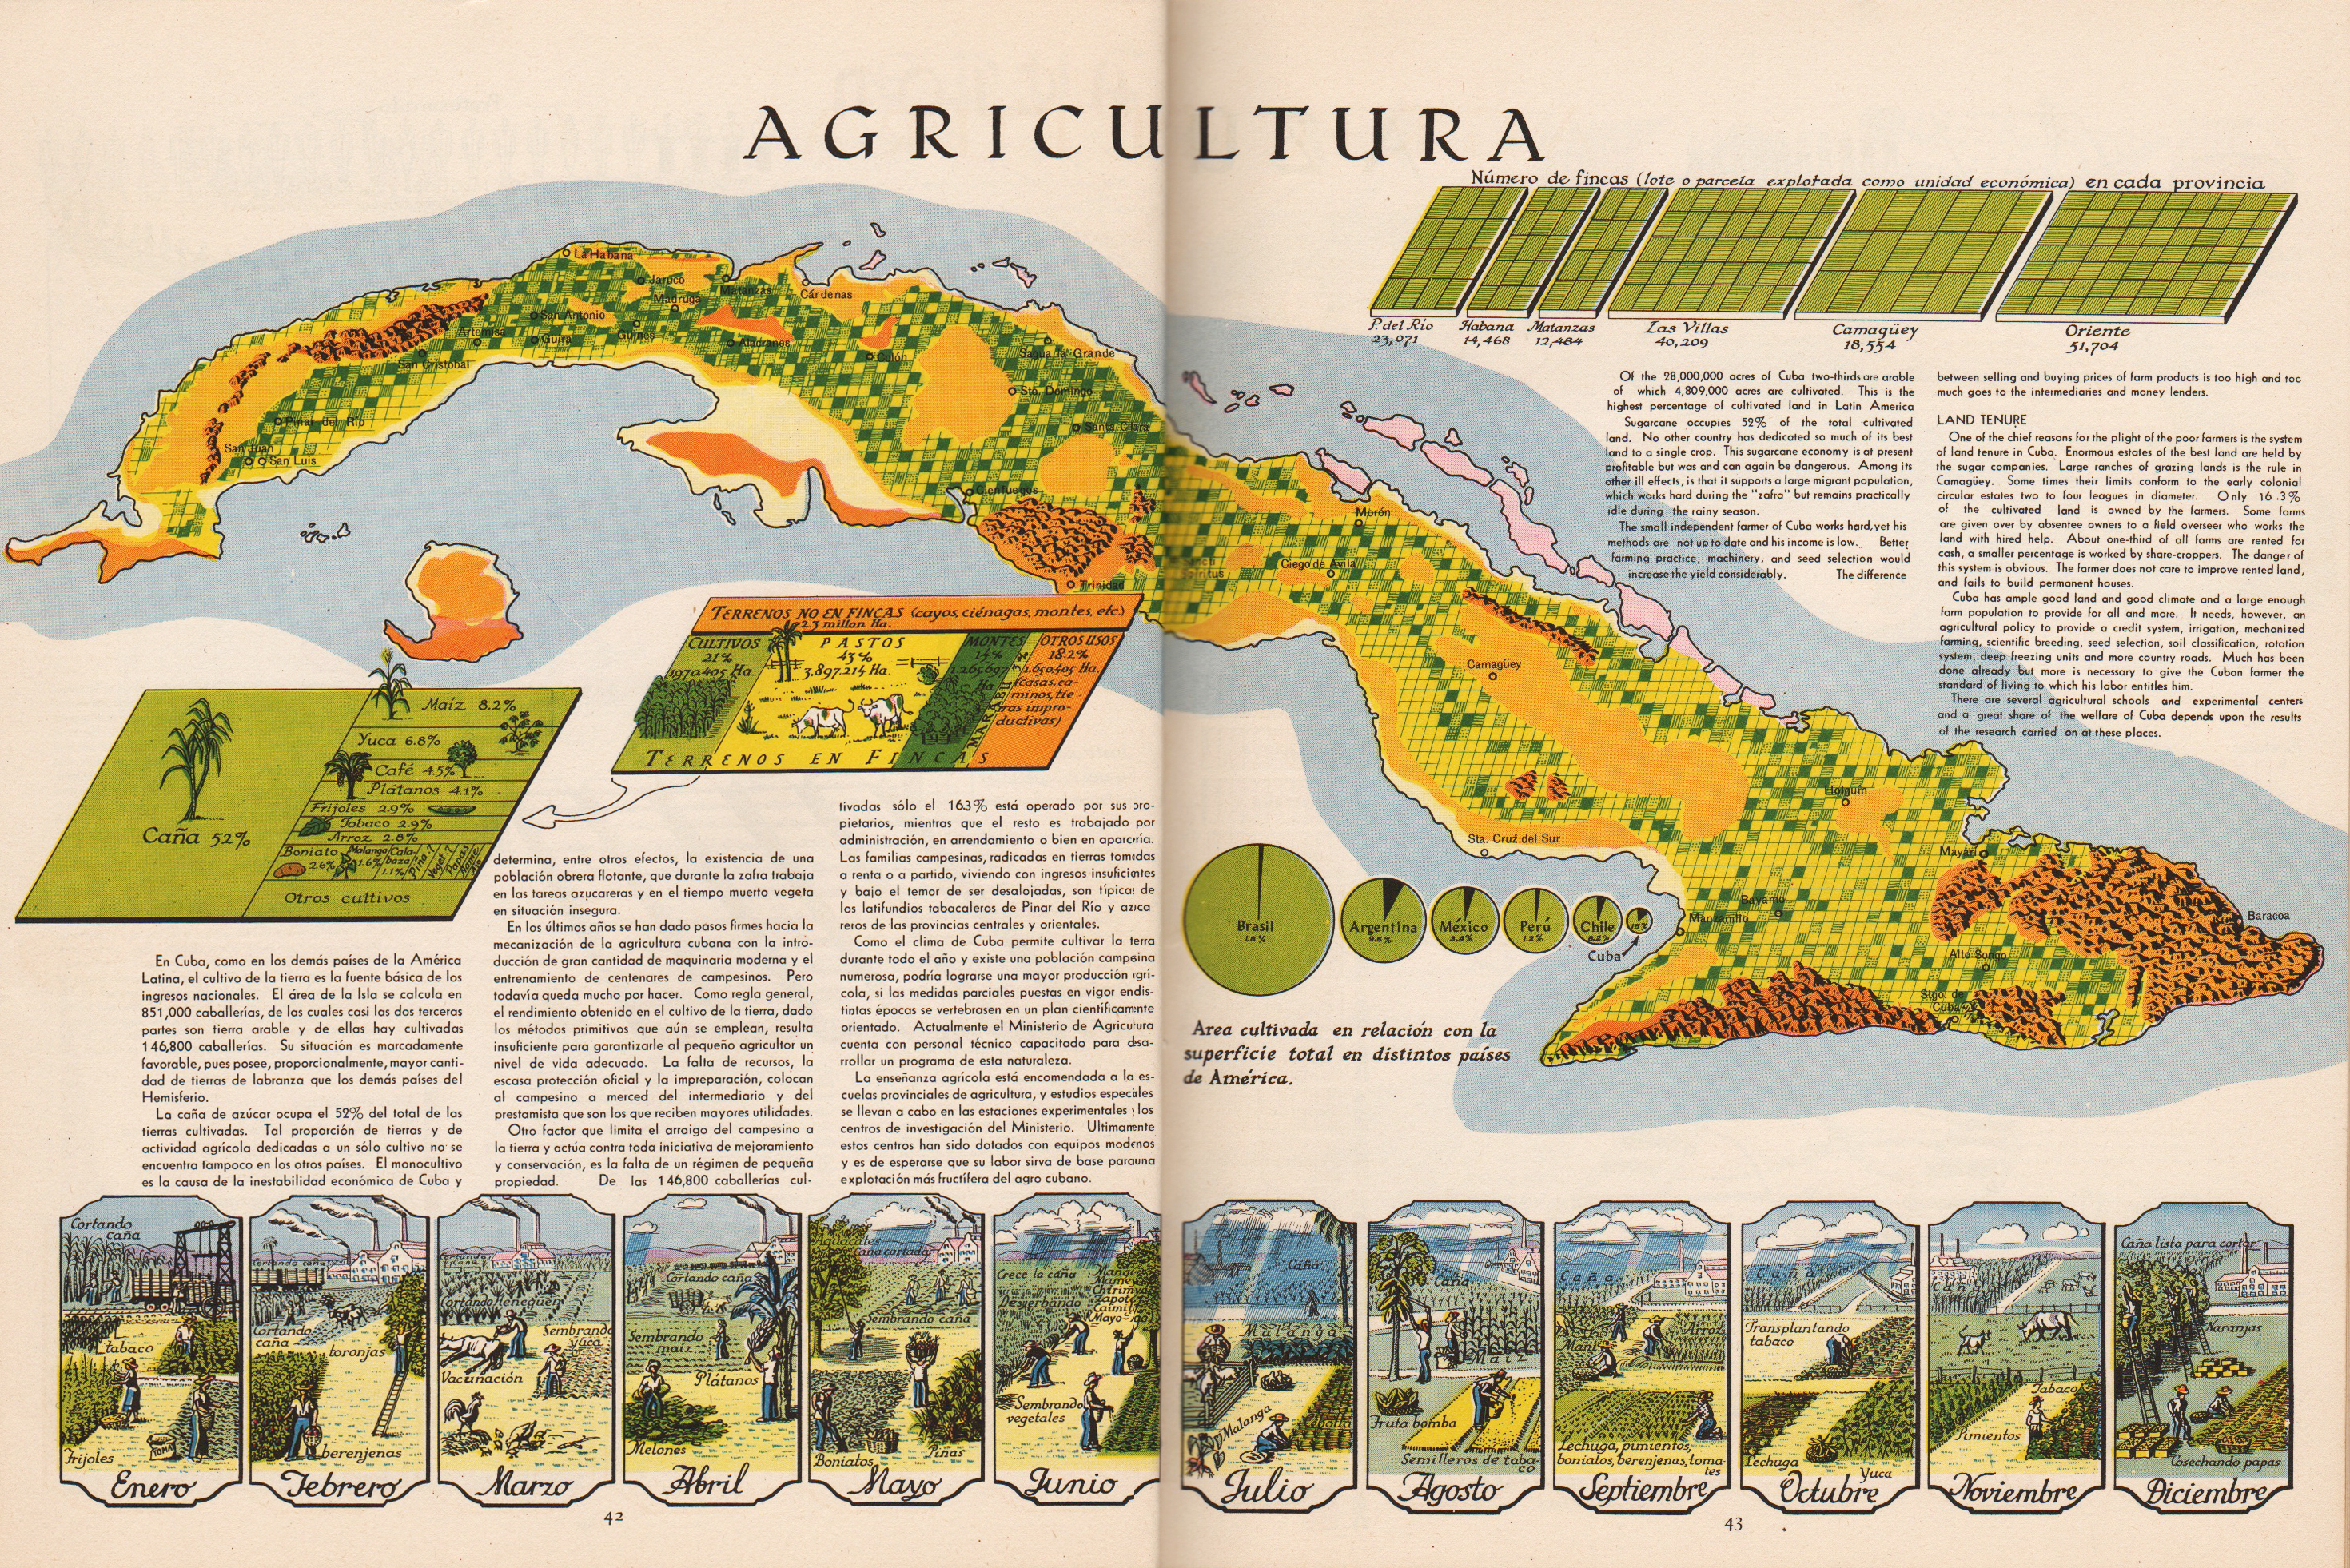 Gerardo Canet and Erwin Raisz, “Agriculture” pages in Atlas de Cuba, 1949